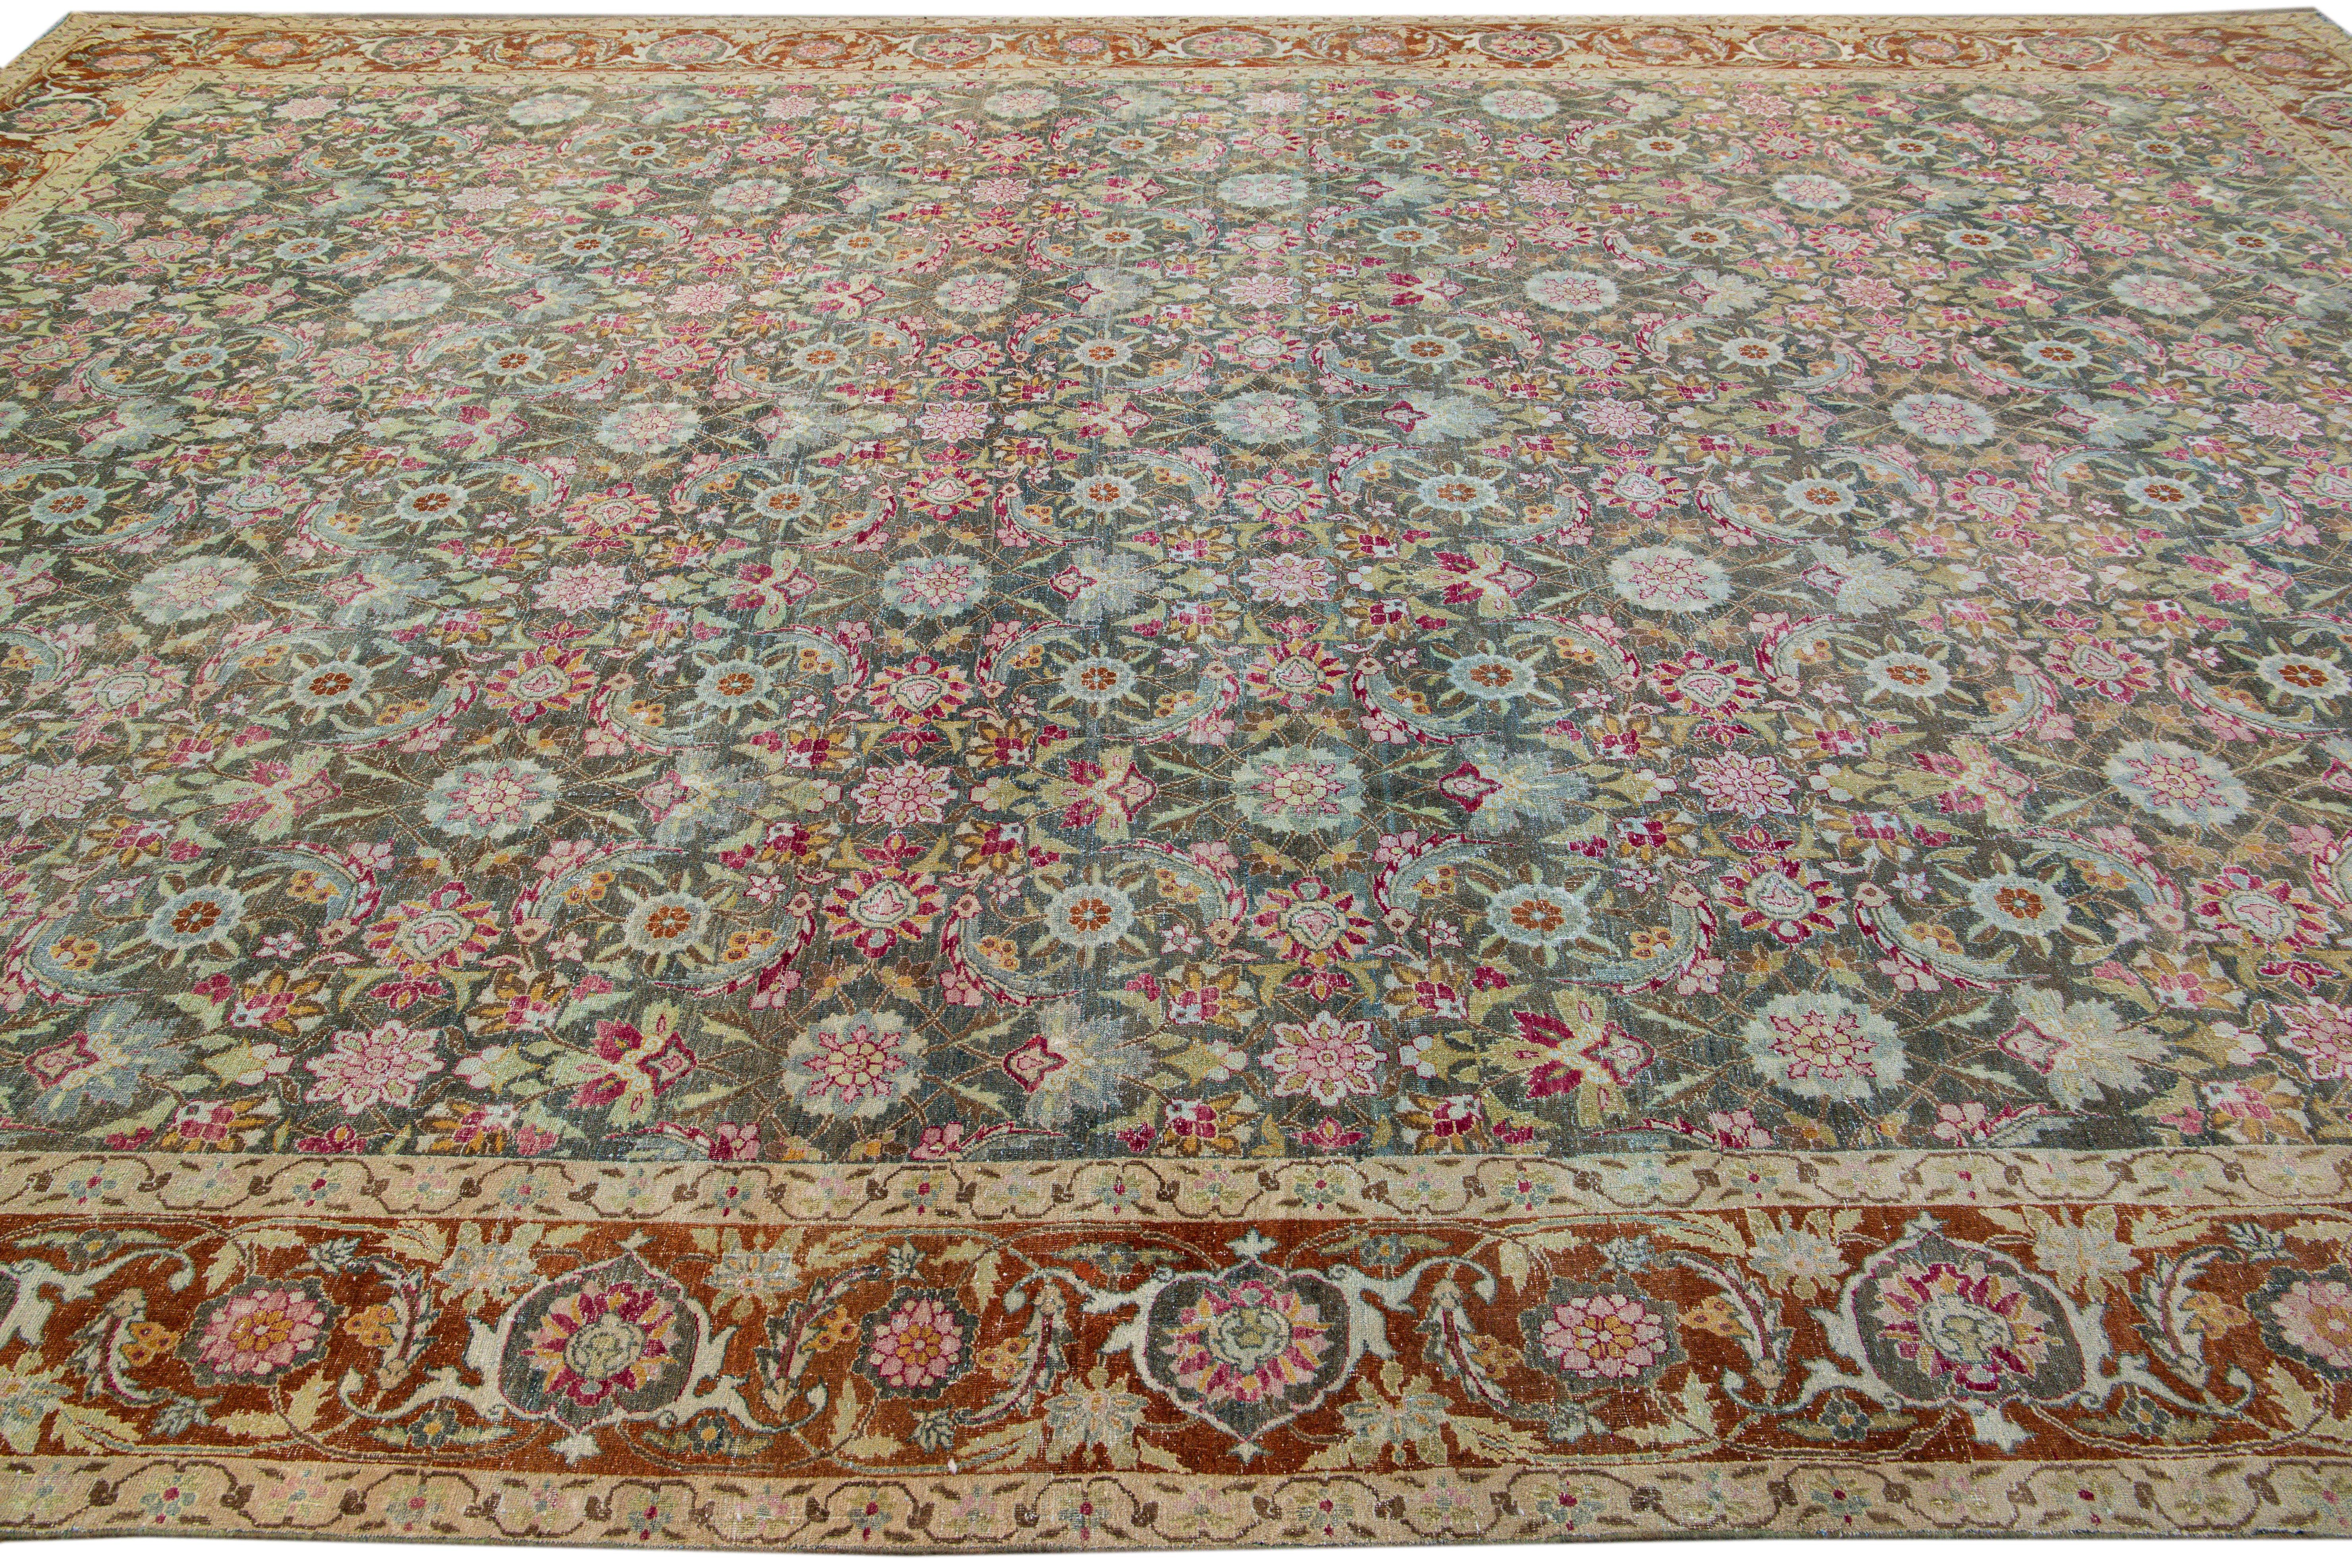 Antique Tabriz Handmade Multicolor Botanical Designed Oversize Gray Wool Rug In Good Condition For Sale In Norwalk, CT